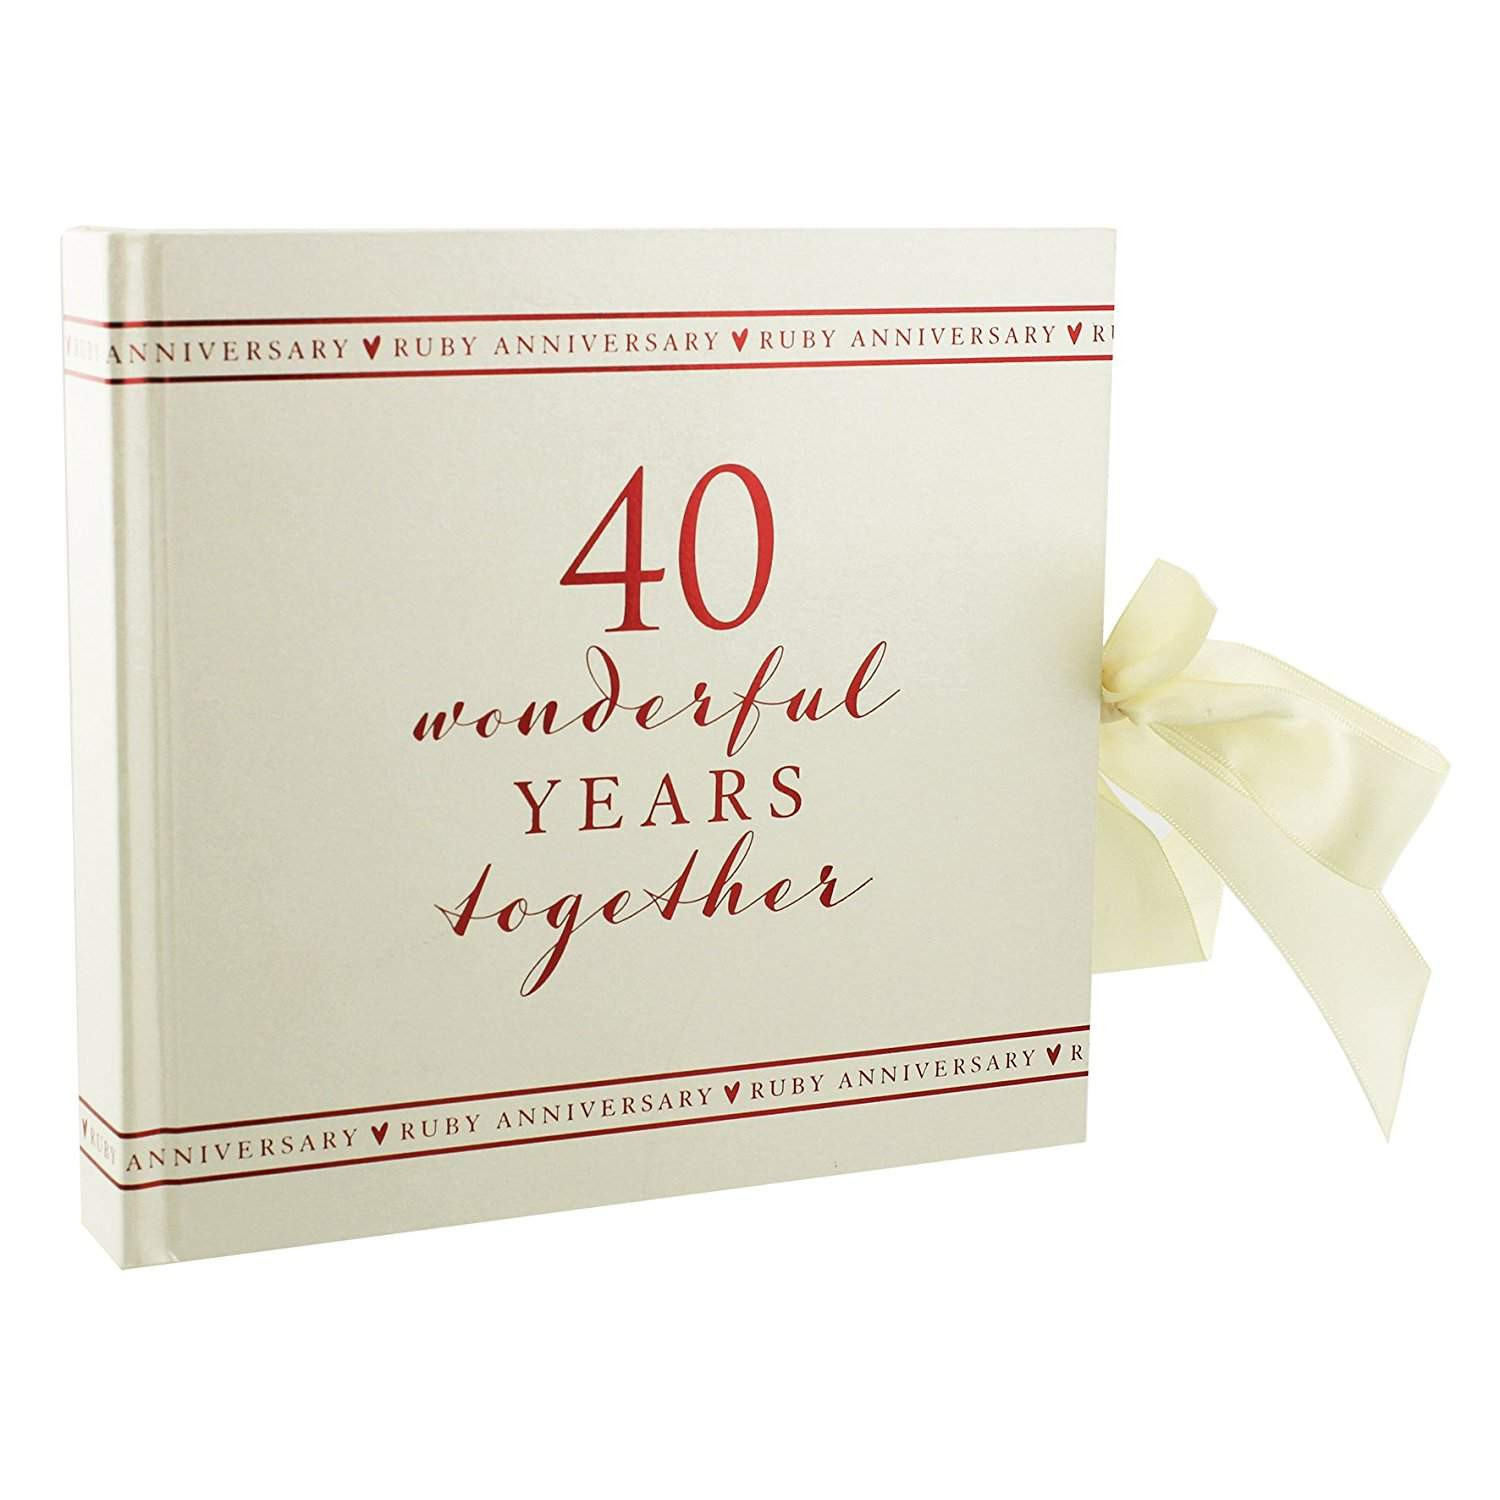 40th Wedding Anniversary Gift
 Top 10 Best 40th Wedding Anniversary Gifts